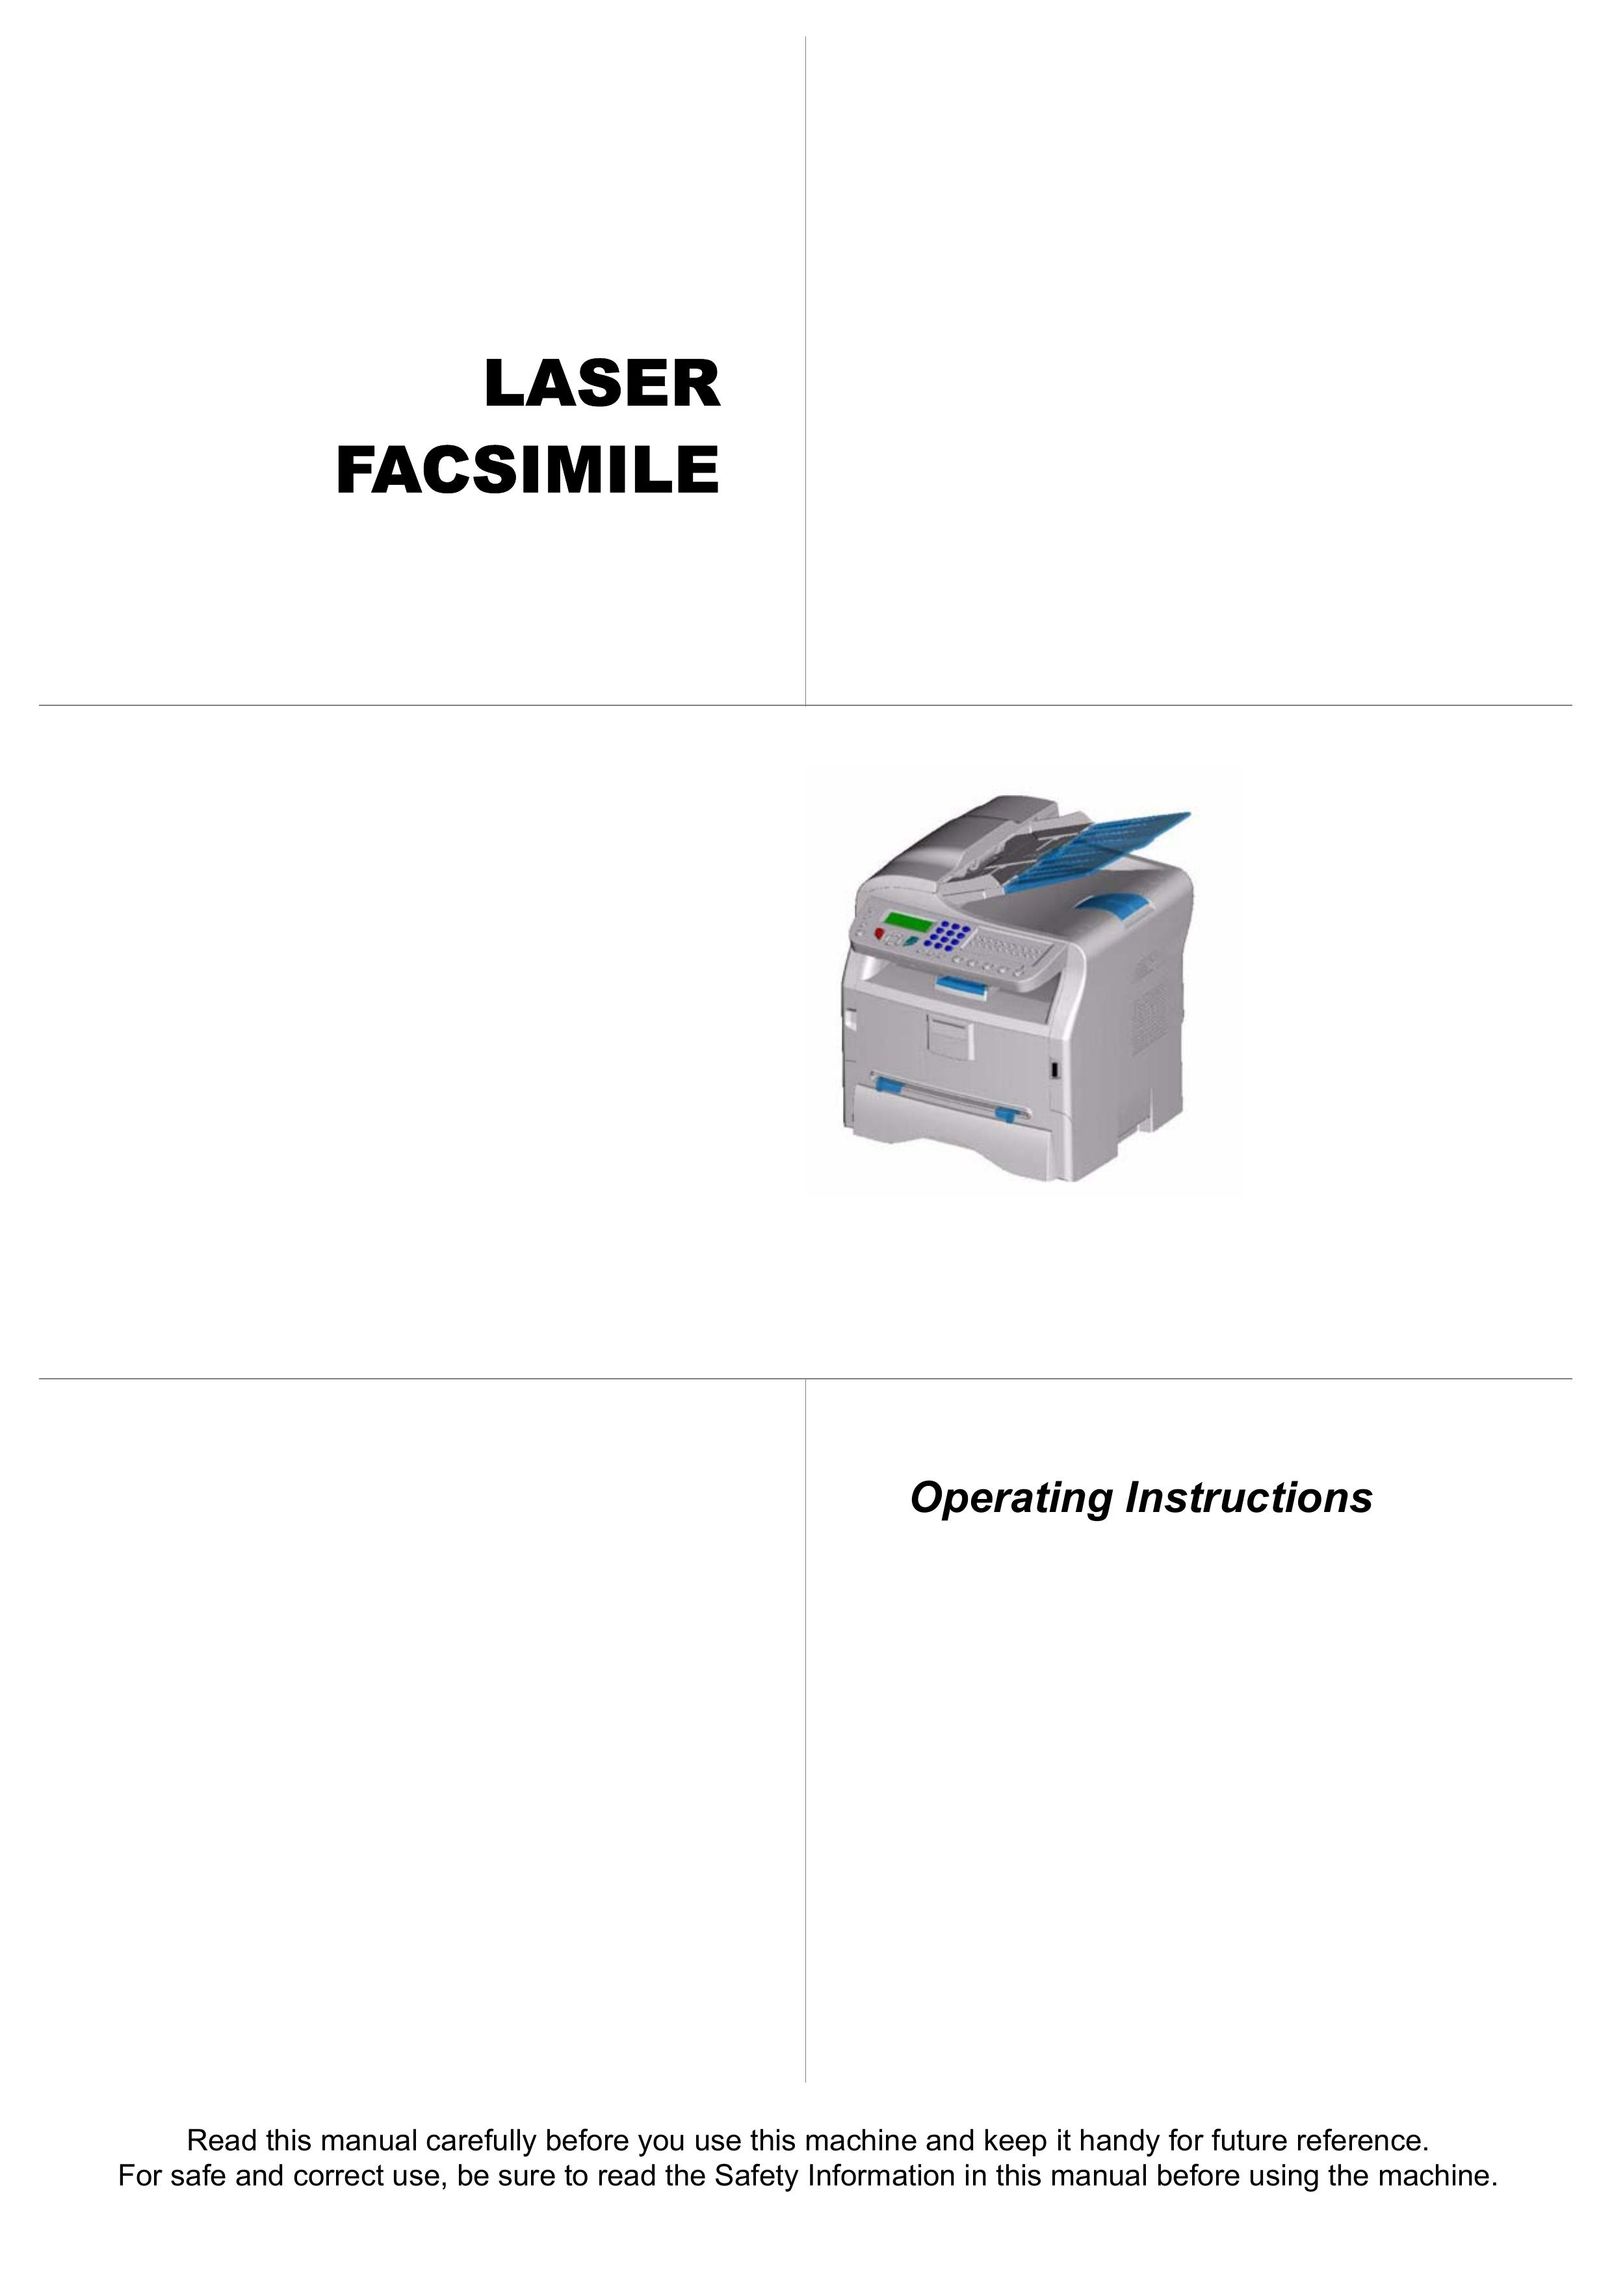 Ricoh LASER FACSIMILE Fax Machine User Manual